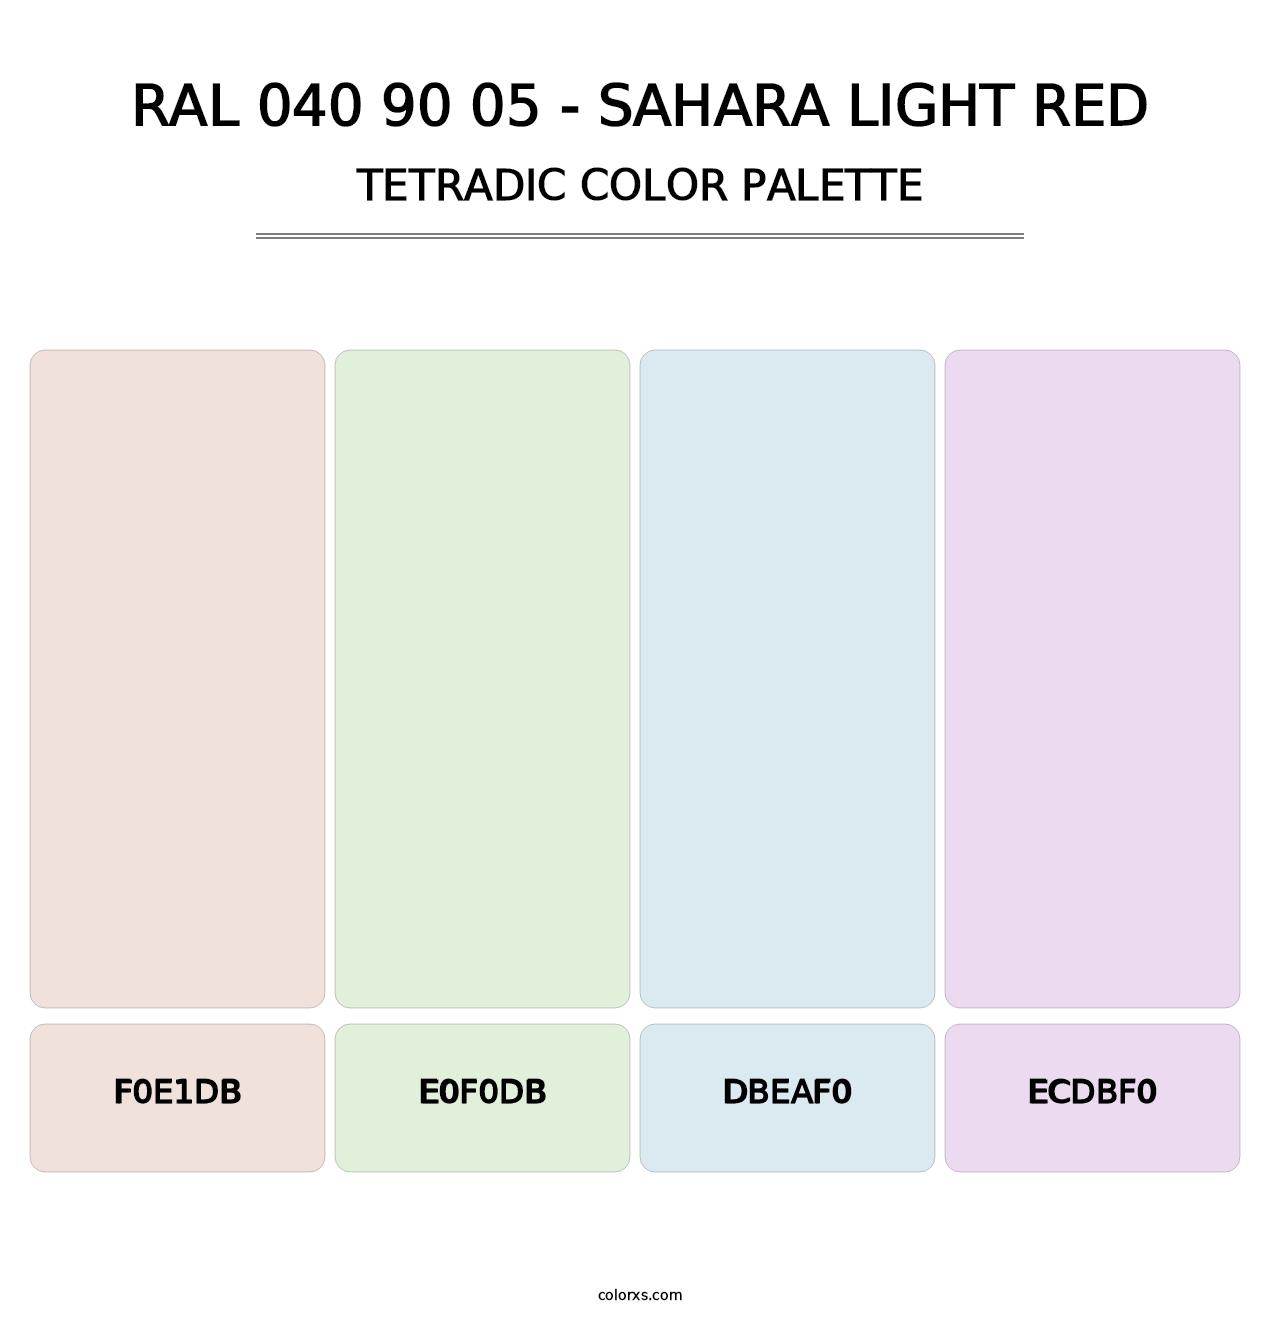 RAL 040 90 05 - Sahara Light Red - Tetradic Color Palette